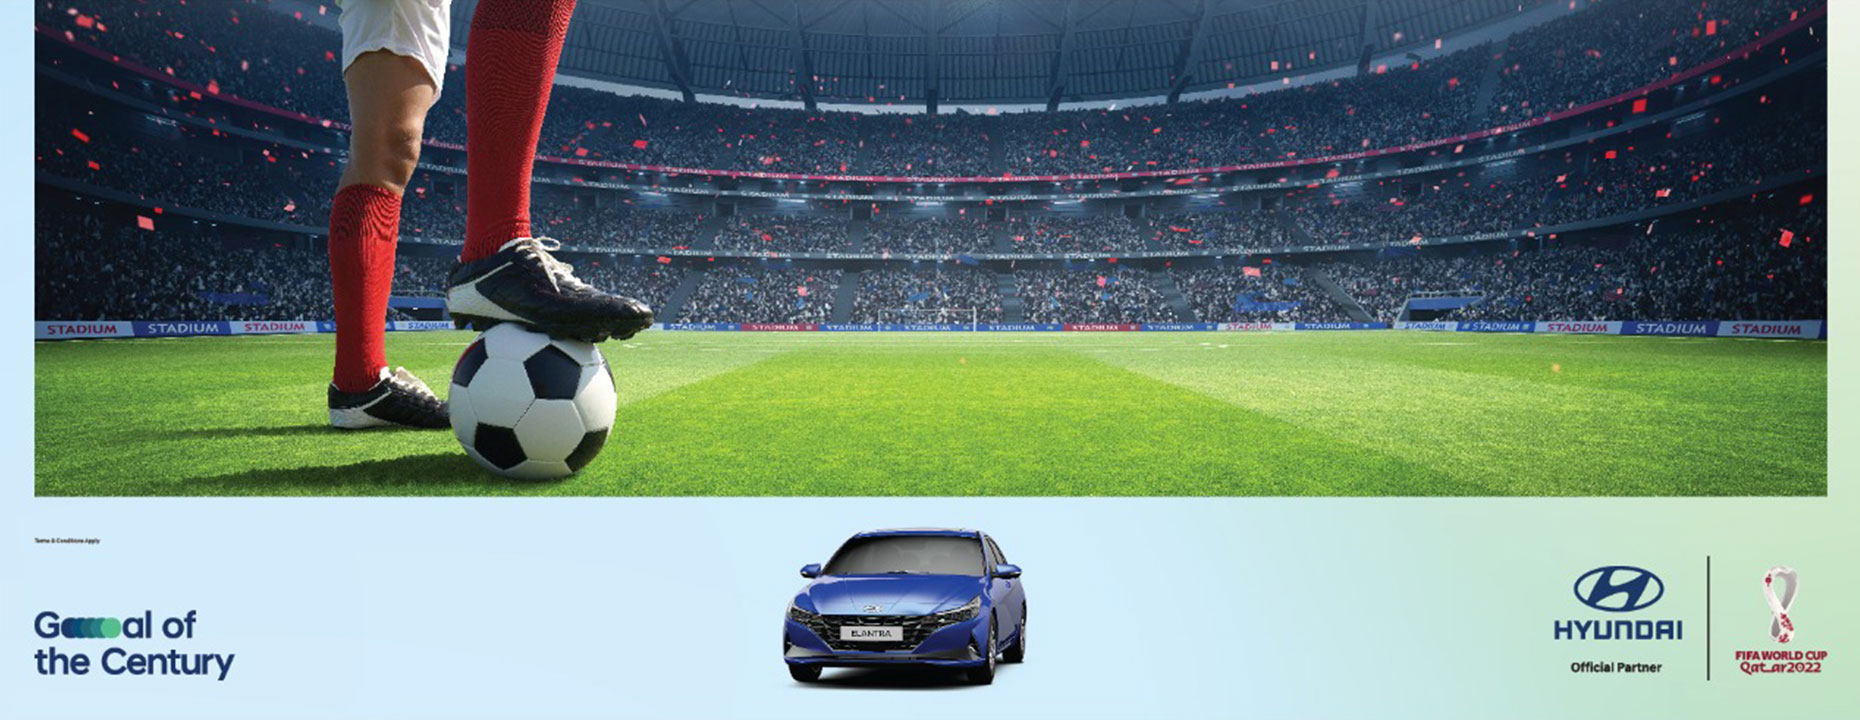 Hyundai FIFA test drive campaign